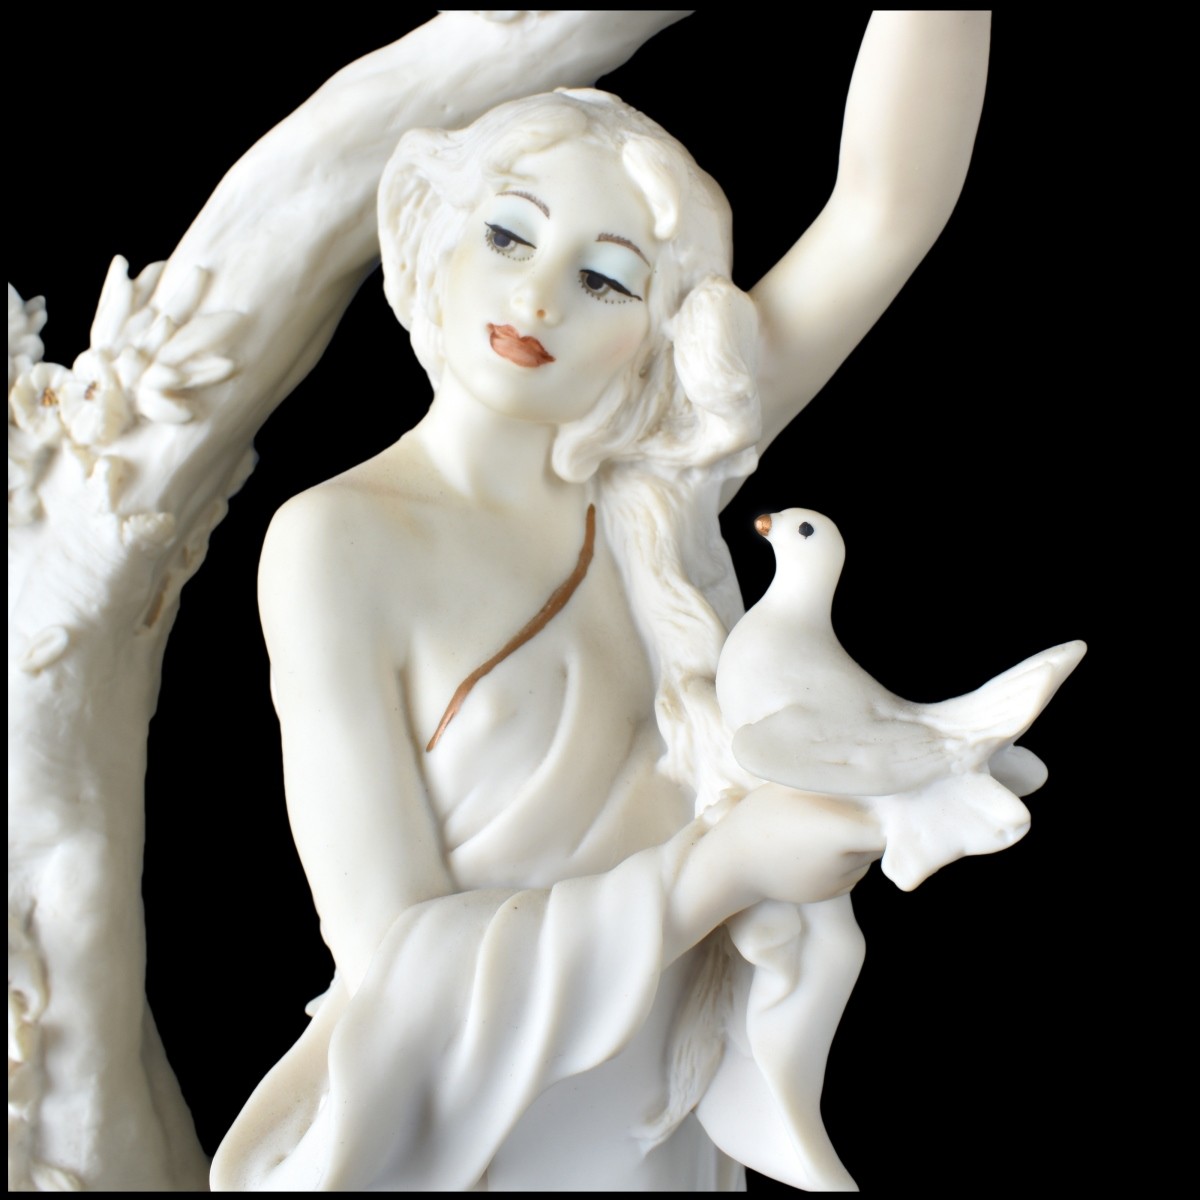 Two (2) Giuseppe Armani Figurines